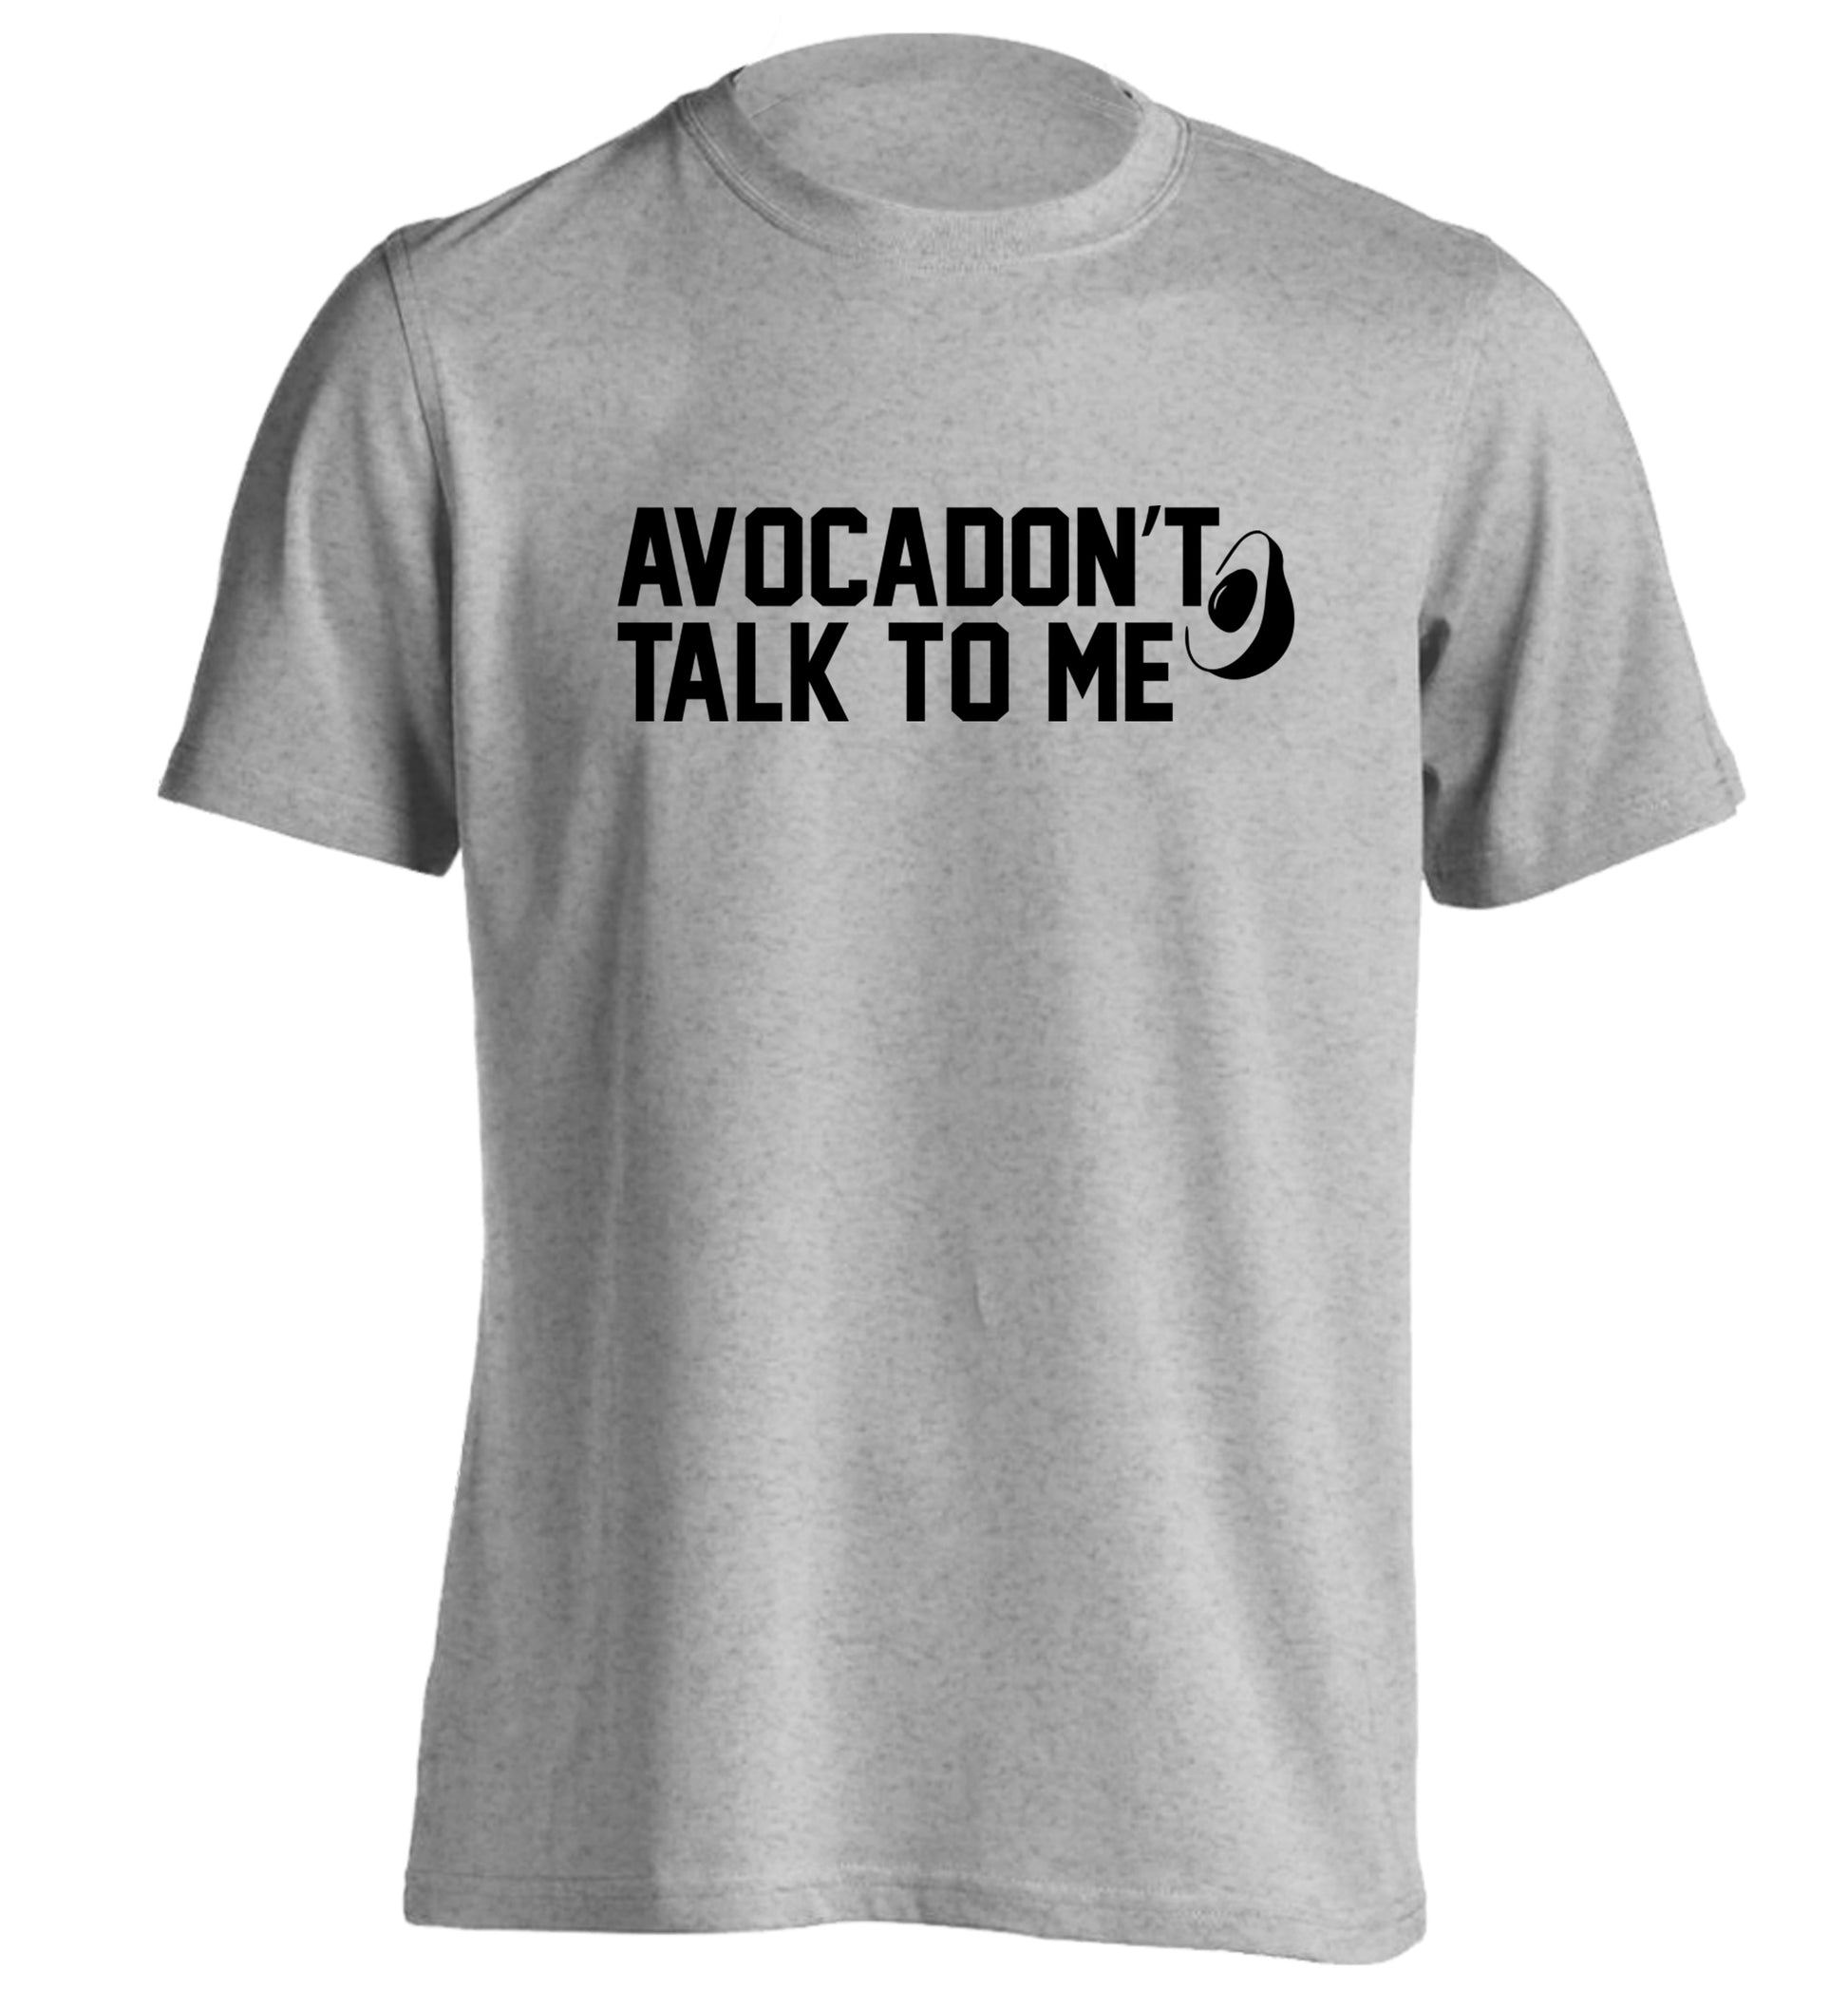 Avocadon't talk to me adults unisex grey Tshirt 2XL